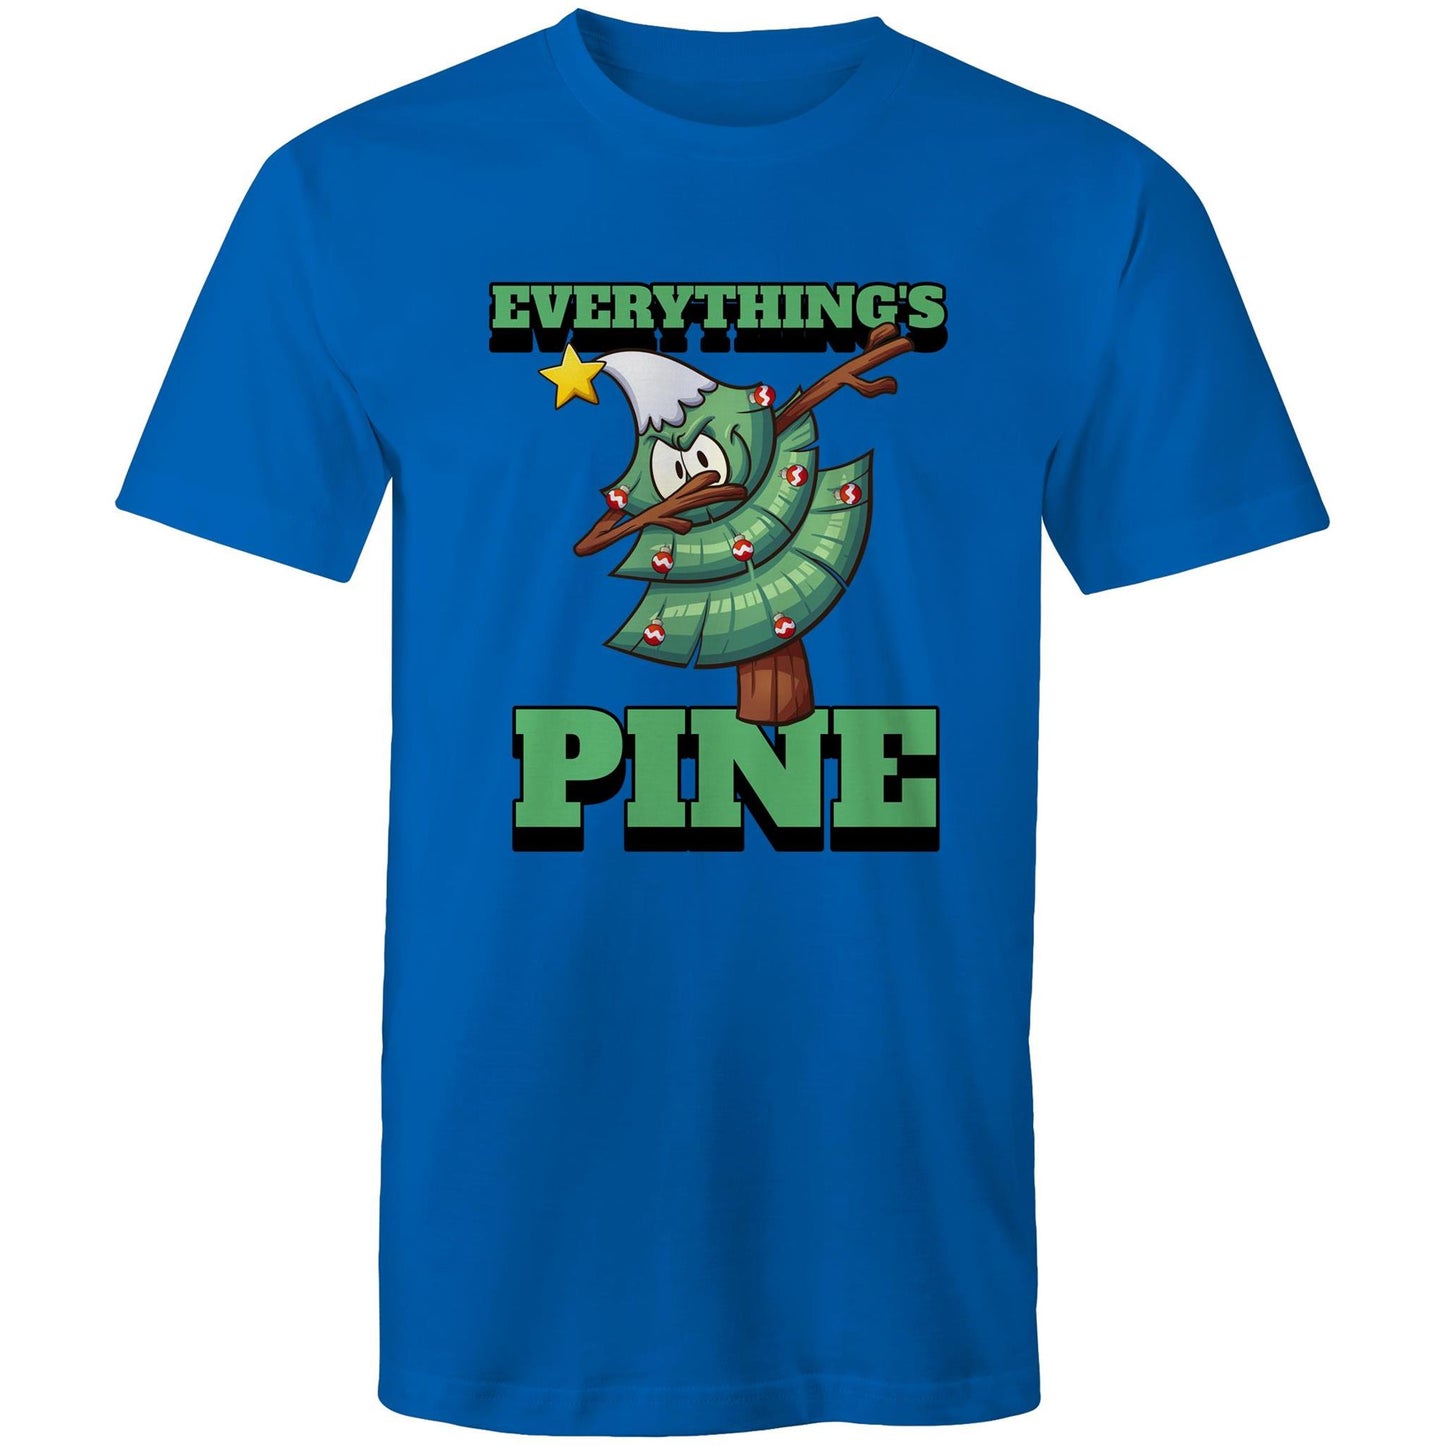 Everything's Pine - Mens T-Shirt Bright Royal Christmas Mens T-shirt Merry Christmas